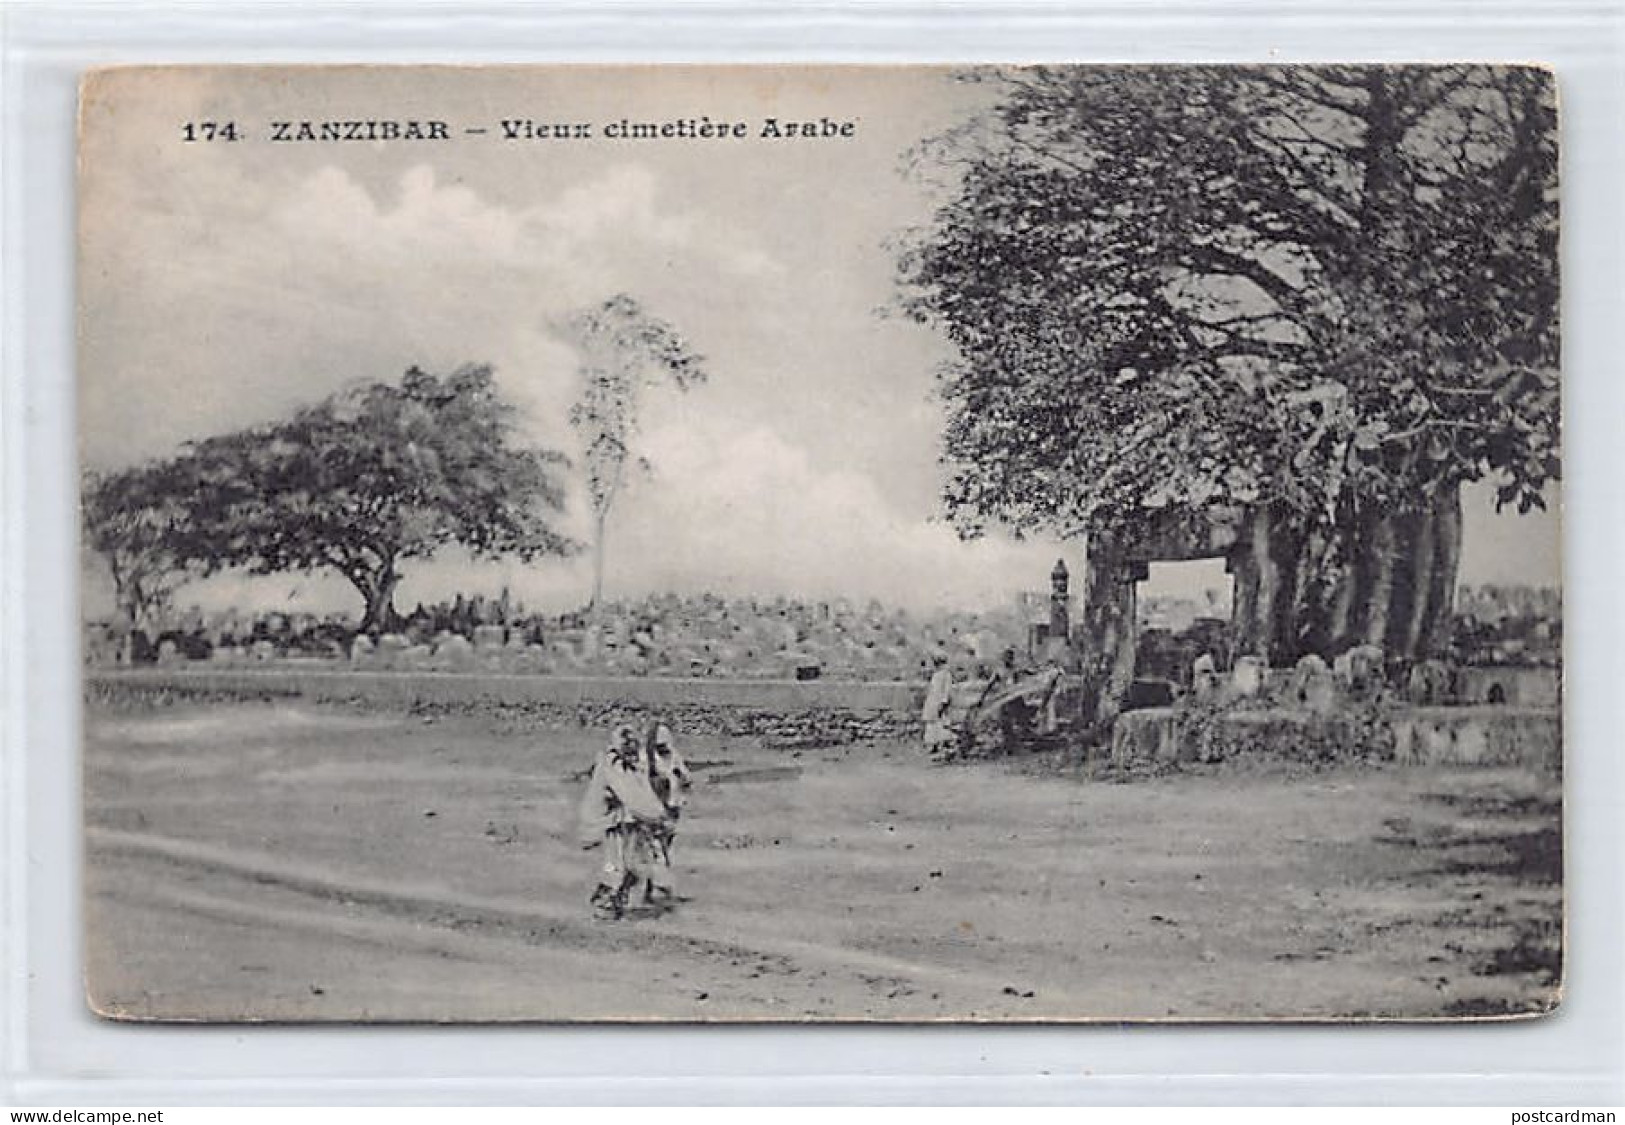 Zanzibar - Old Arab Cemetery - Publ. Messageries Maritimes 174 - Tanzanie